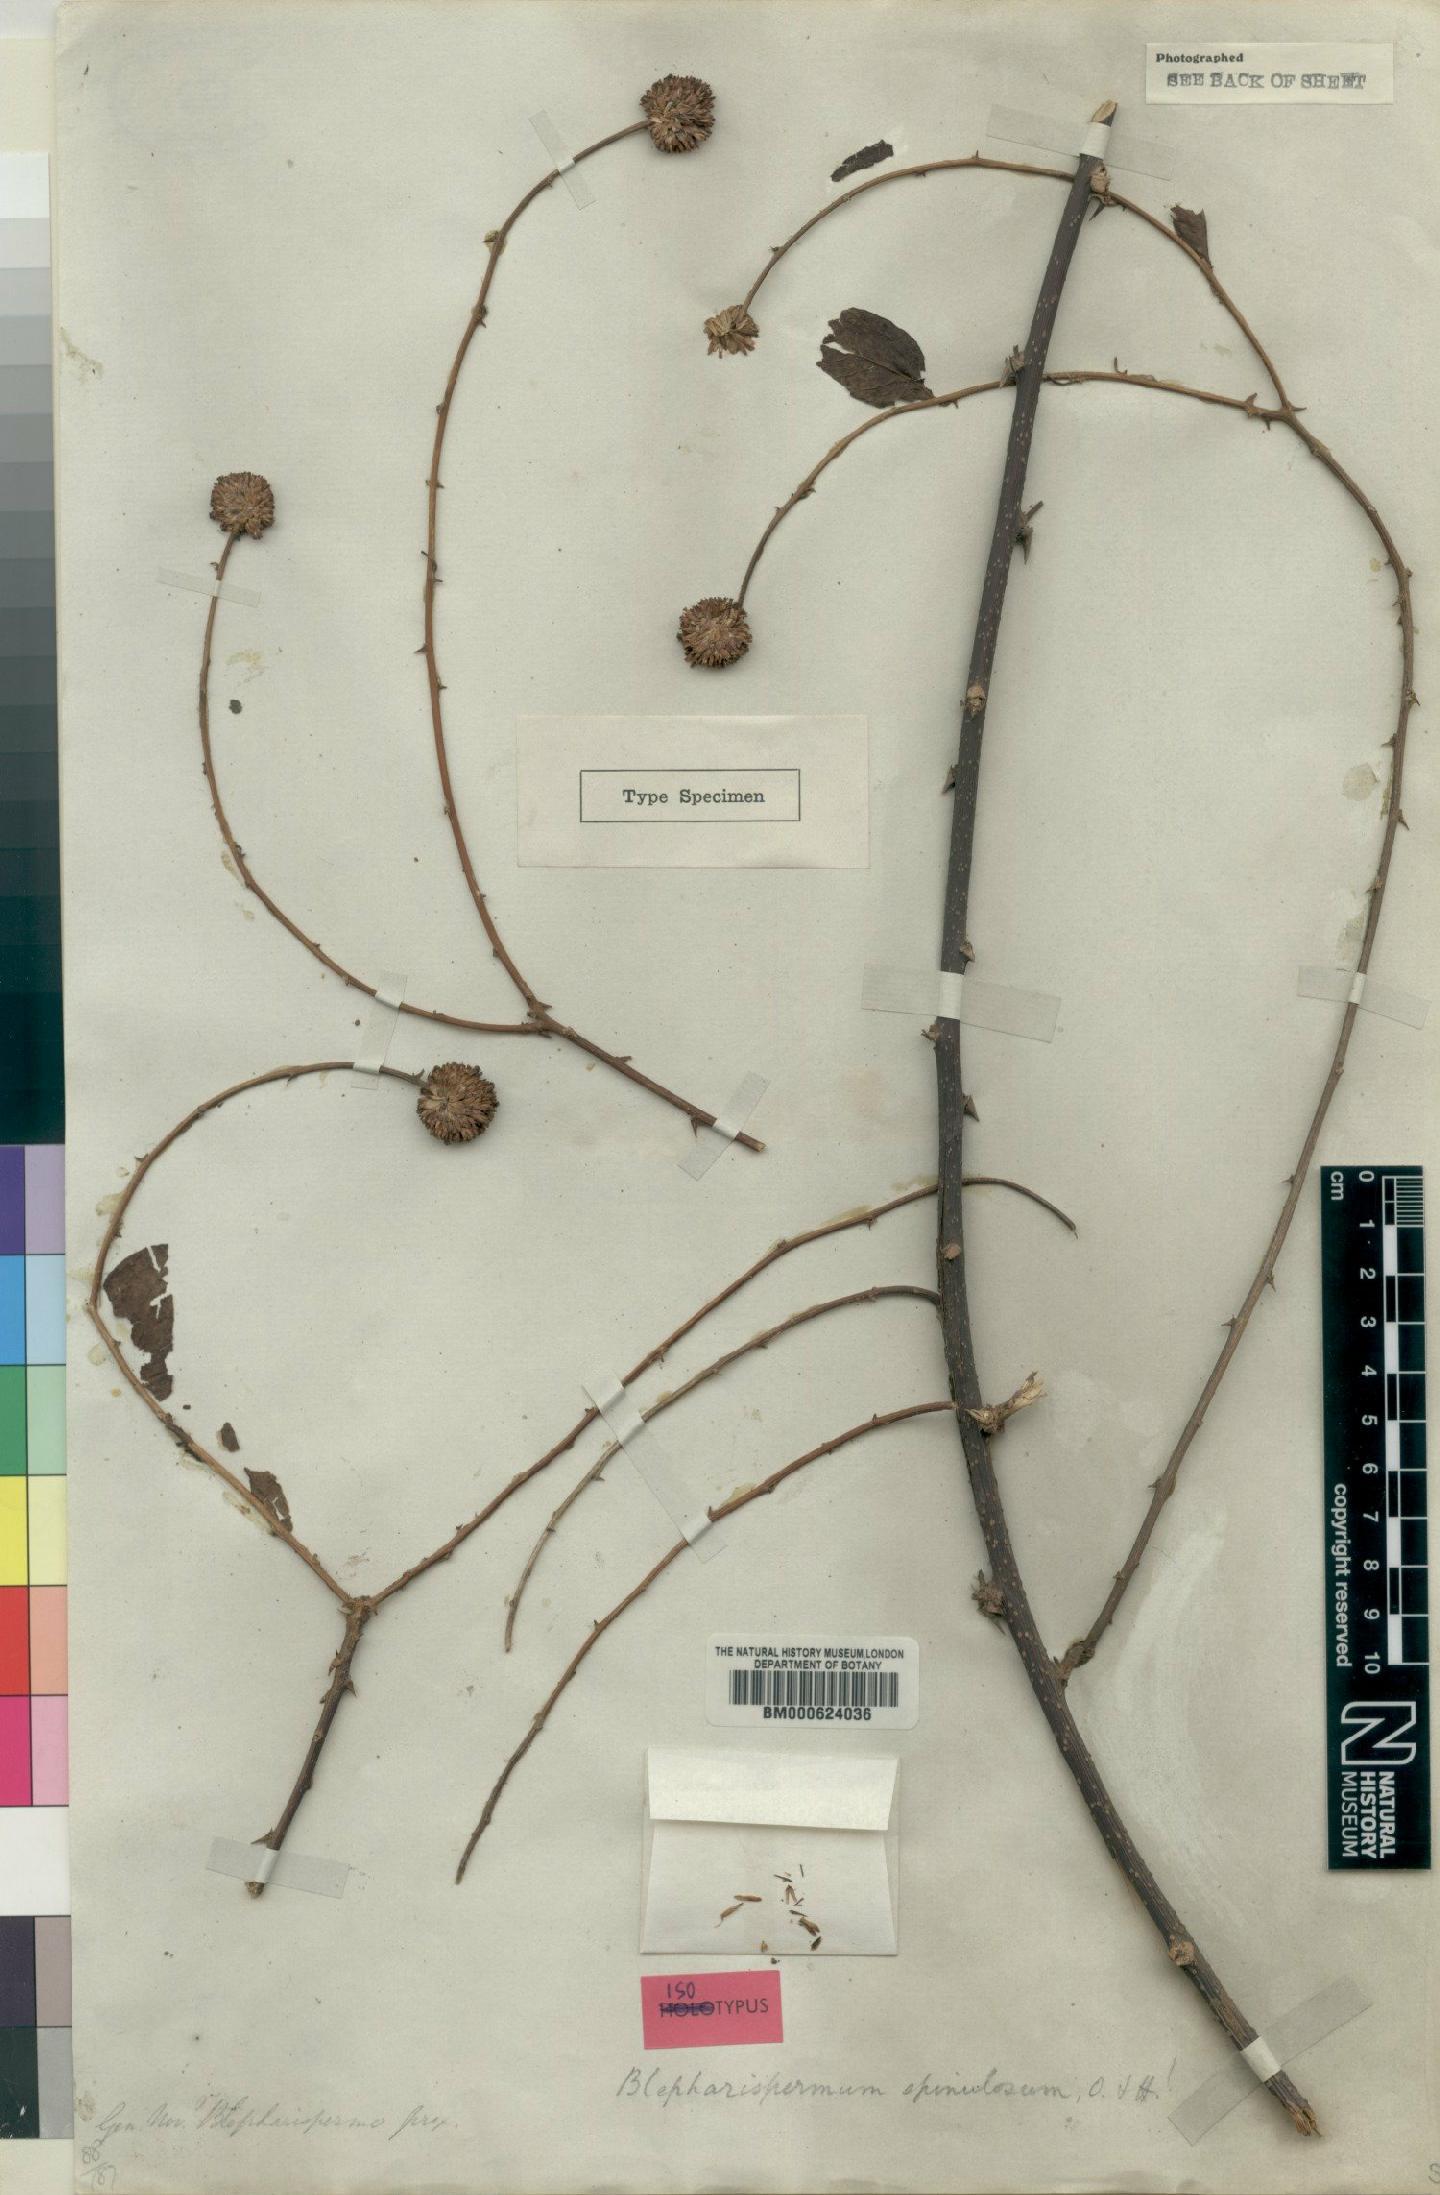 To NHMUK collection (Blepharispermum spinulosum Oliv. & Hiern; Isotype; NHMUK:ecatalogue:4528657)